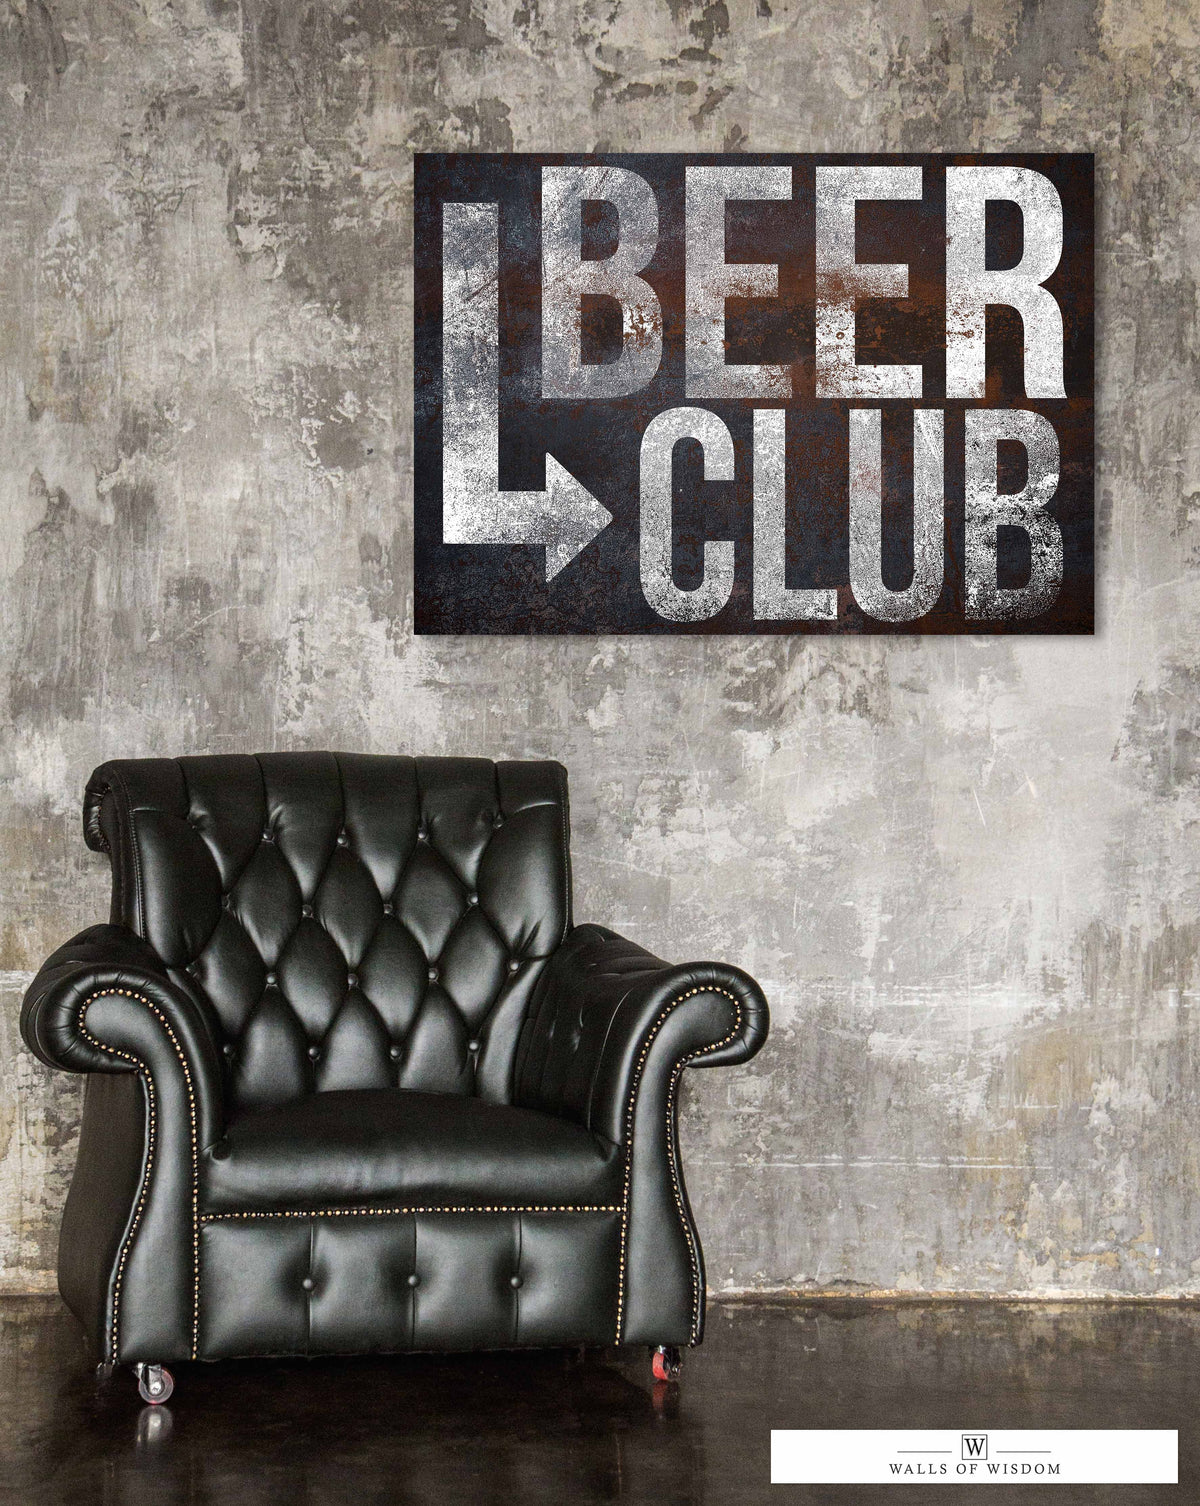 Black & White Rustic "Beer Club" Canvas Sign - Retro Living Room Home Bar Wall Art